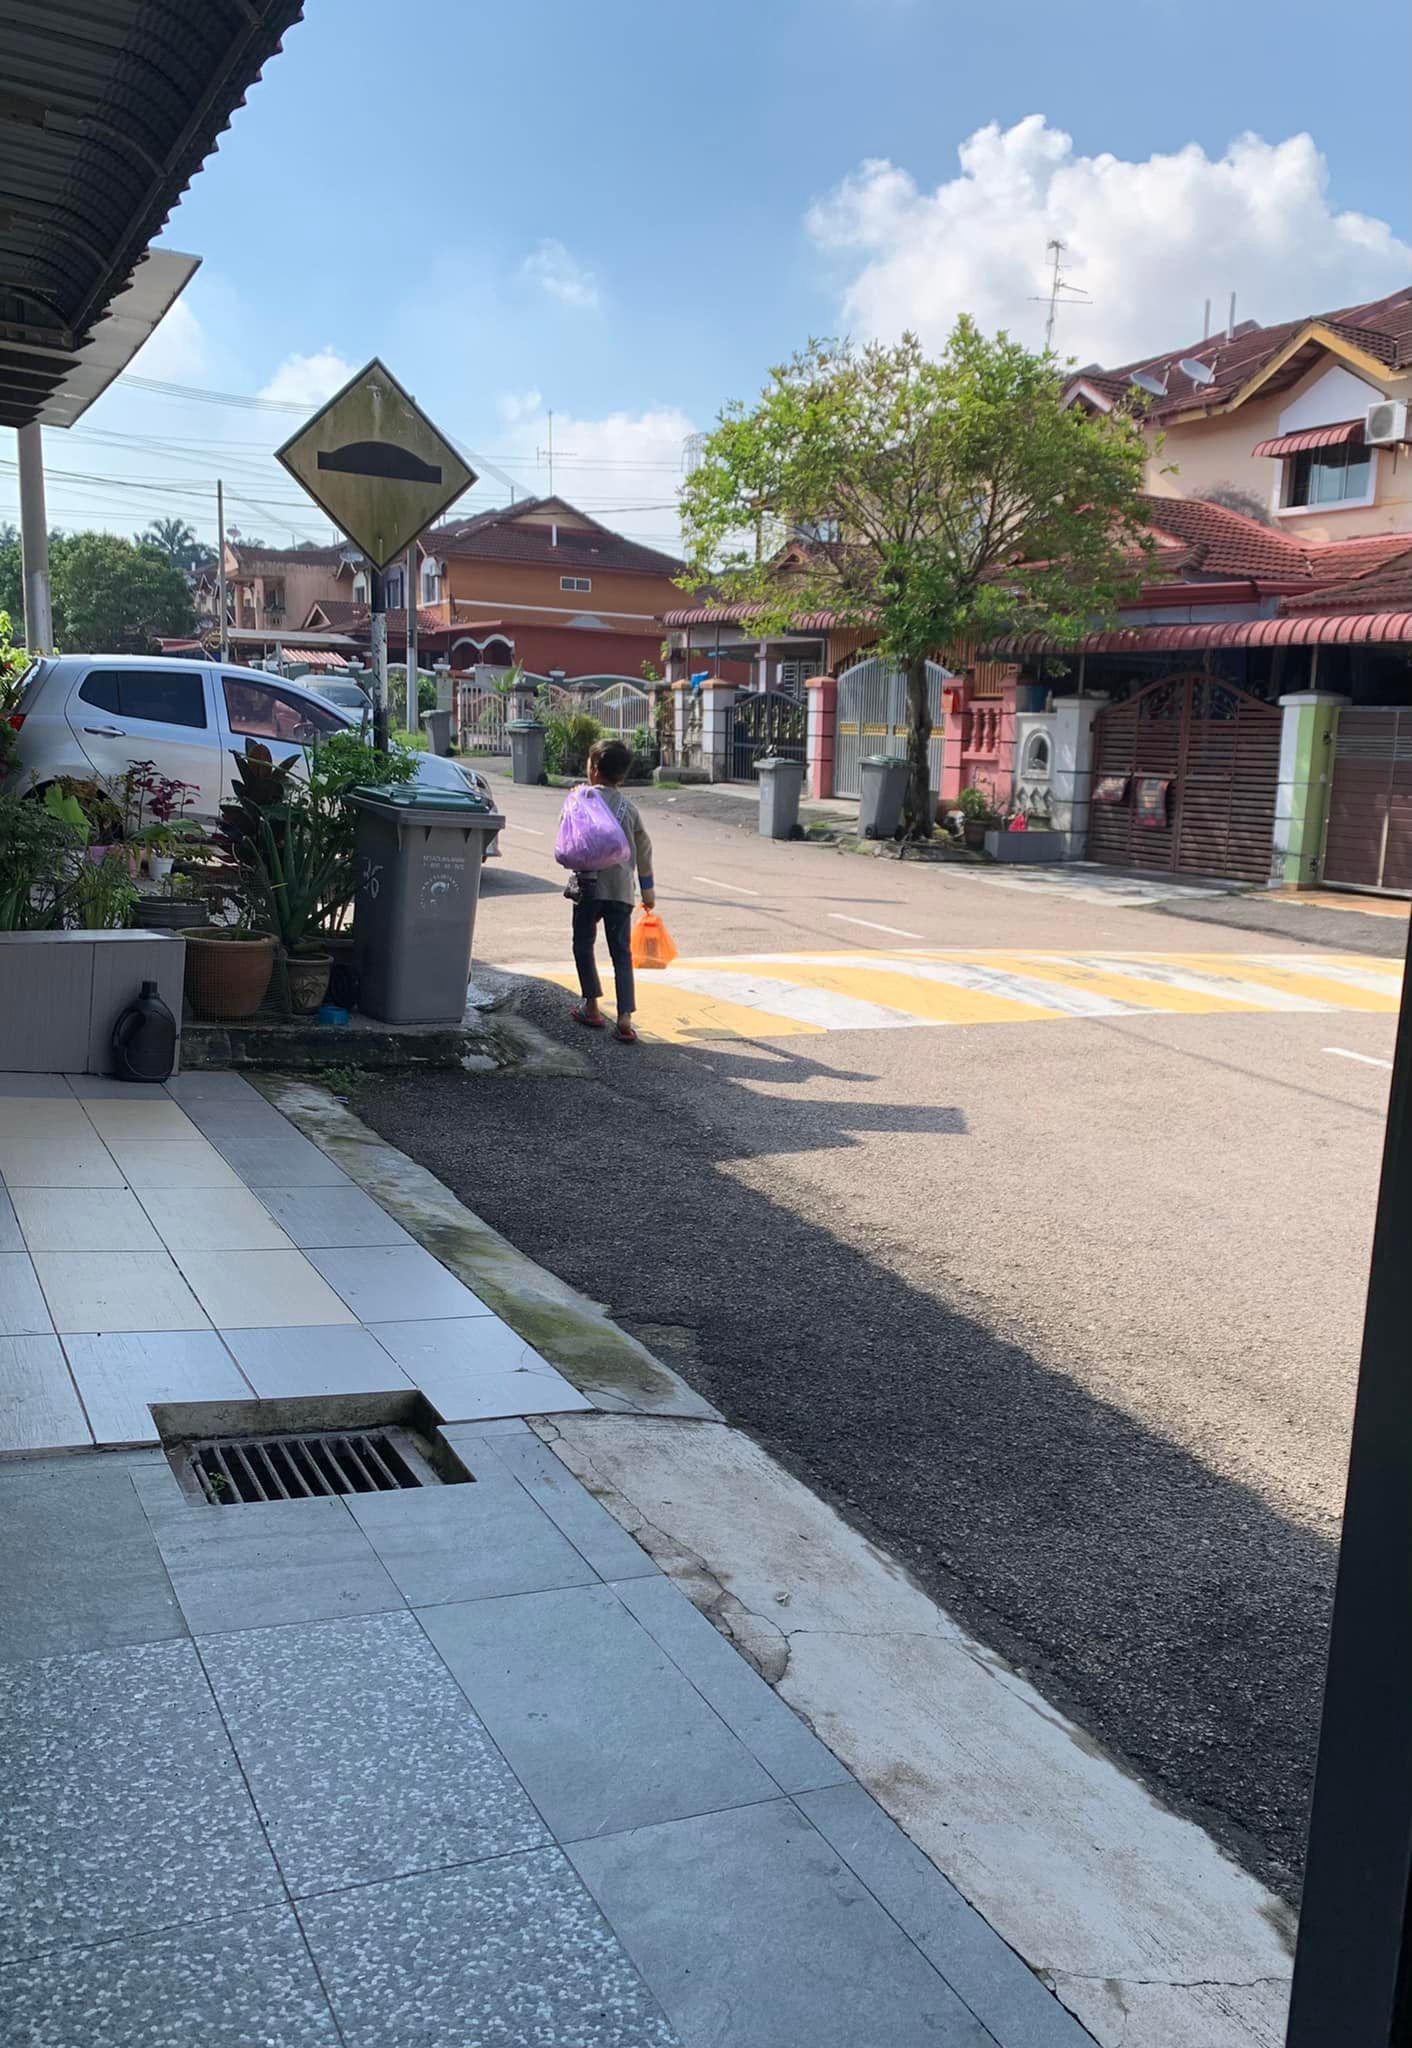 A Malaysian woman shares how she had encountered a young boy selling mushrooms in her Johor neighborhood. Image credit: Rosmaliana Roslan